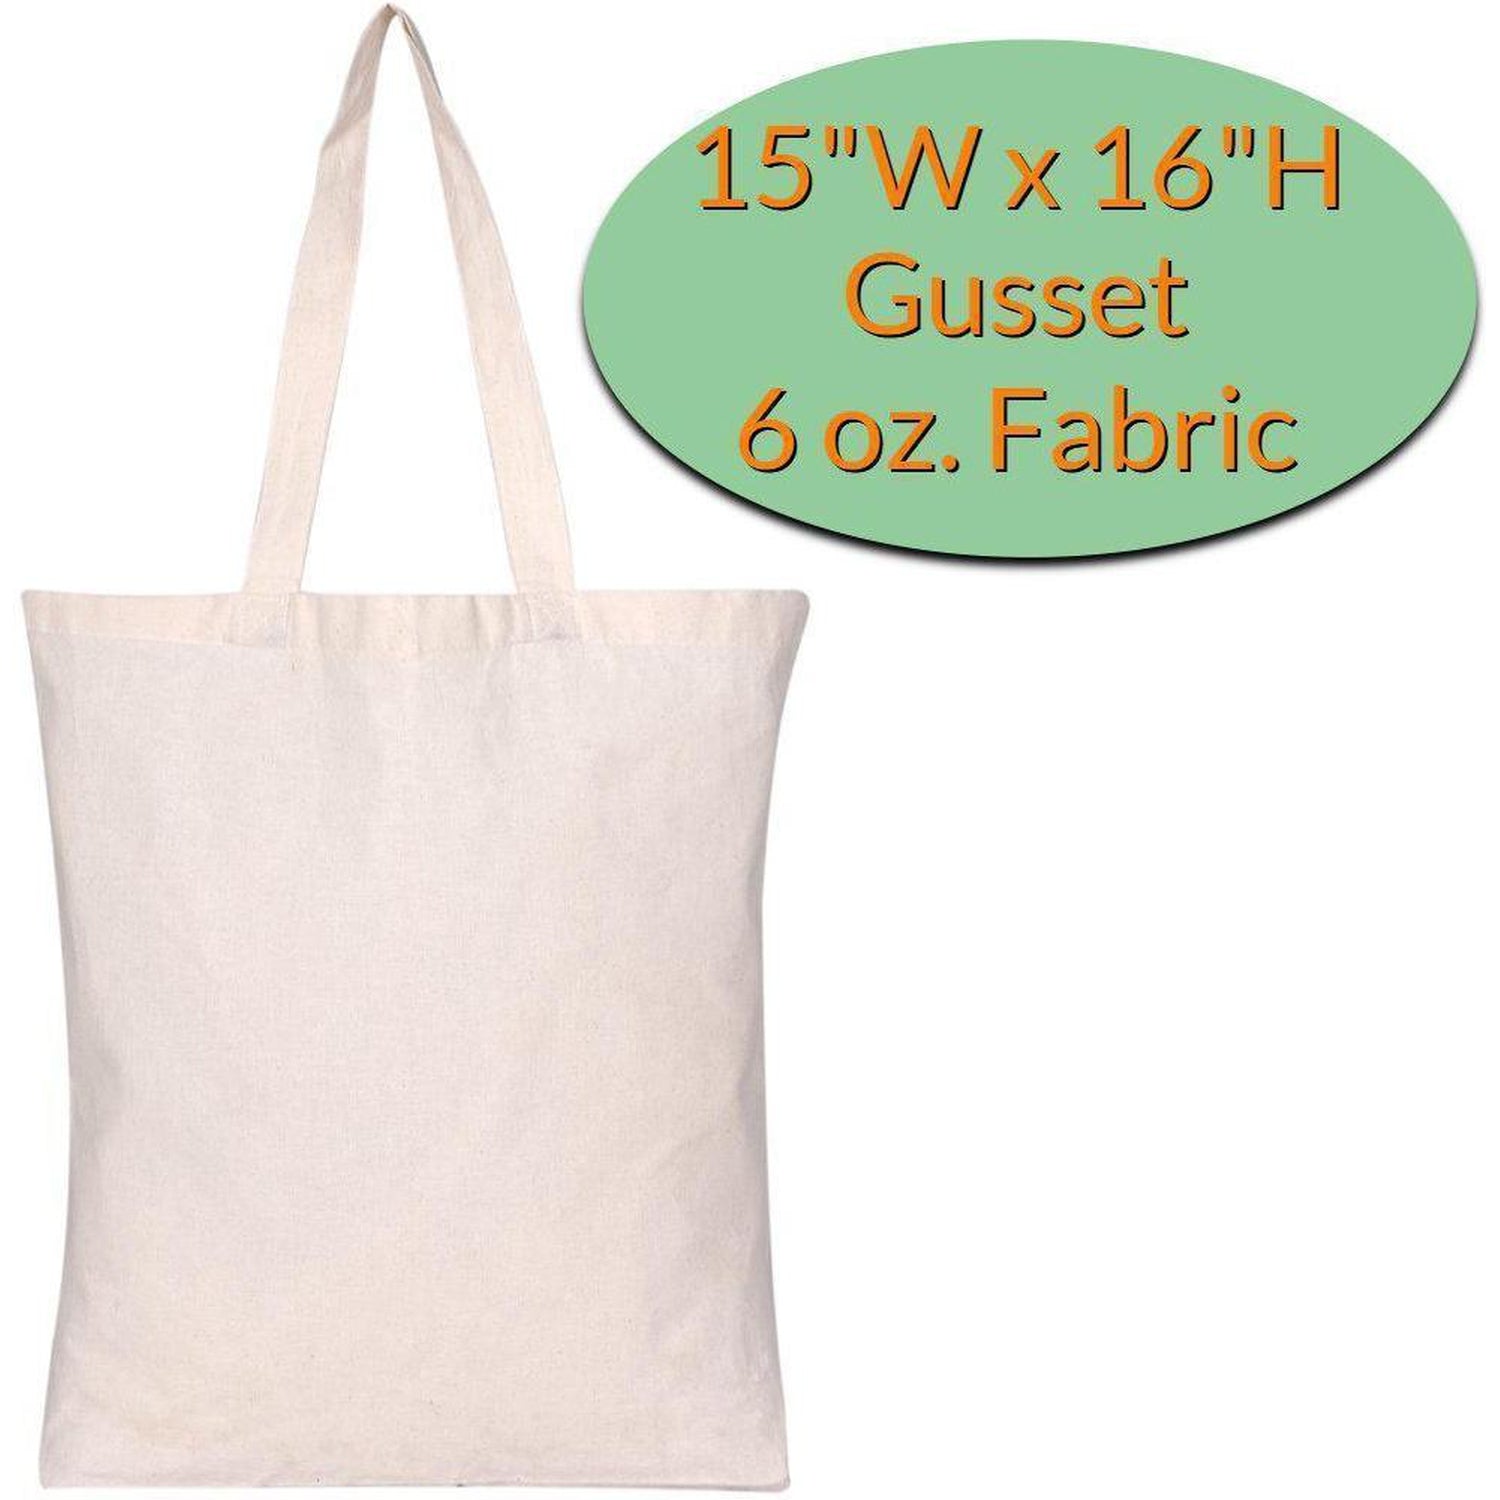 Cotton Tote Bags Wholesale - Cotton Tote Bag BTG110 | BagzDepot ...